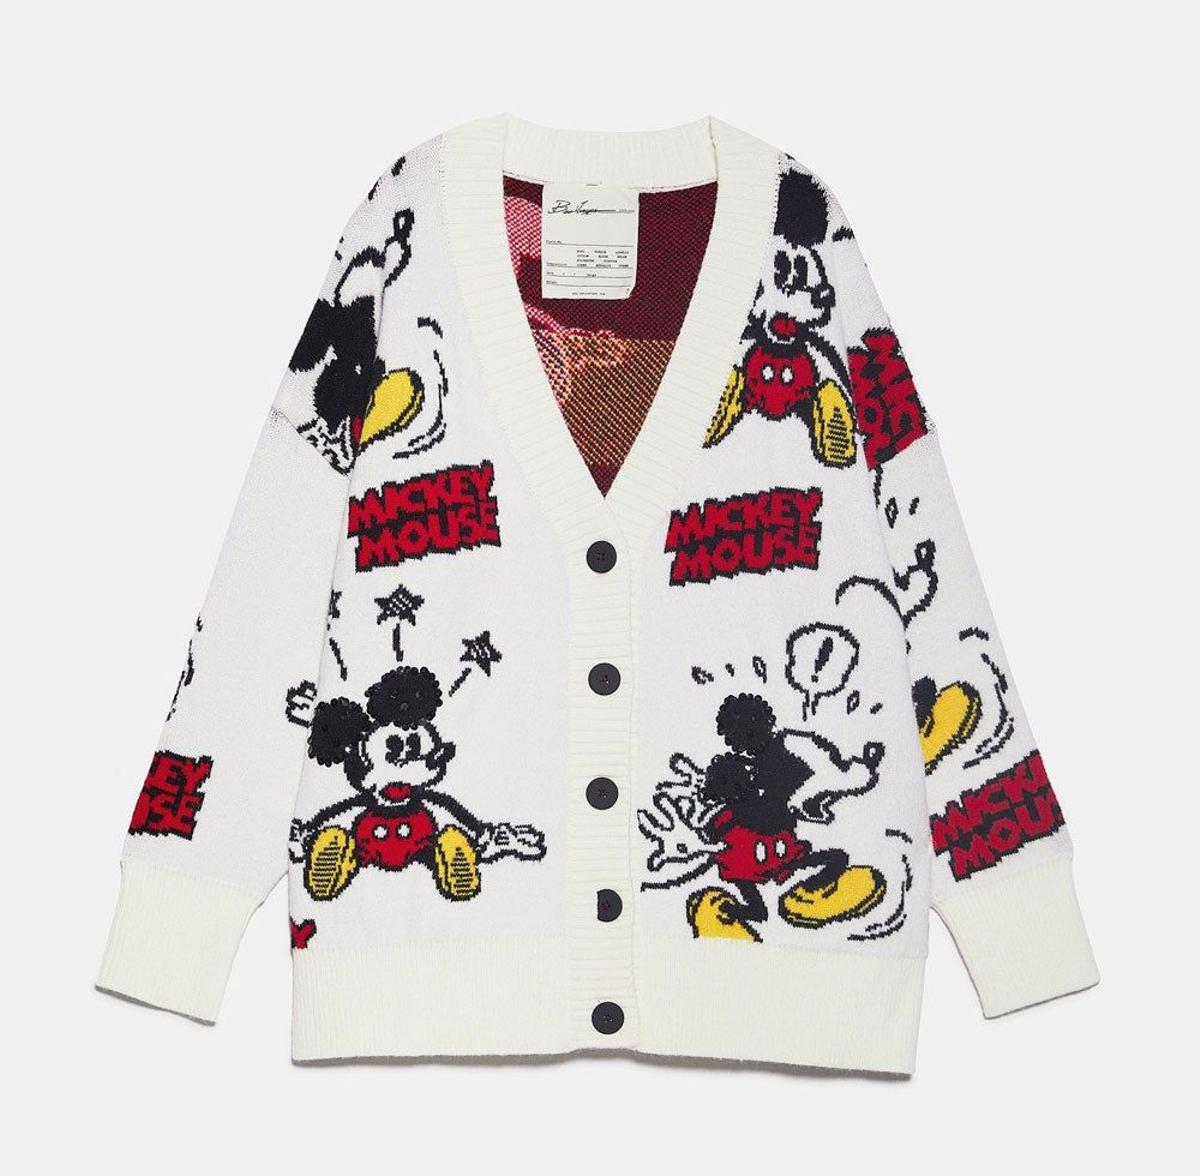 Cárdigan de Mickey Mouse de Zara. Precio (39,95 euros)